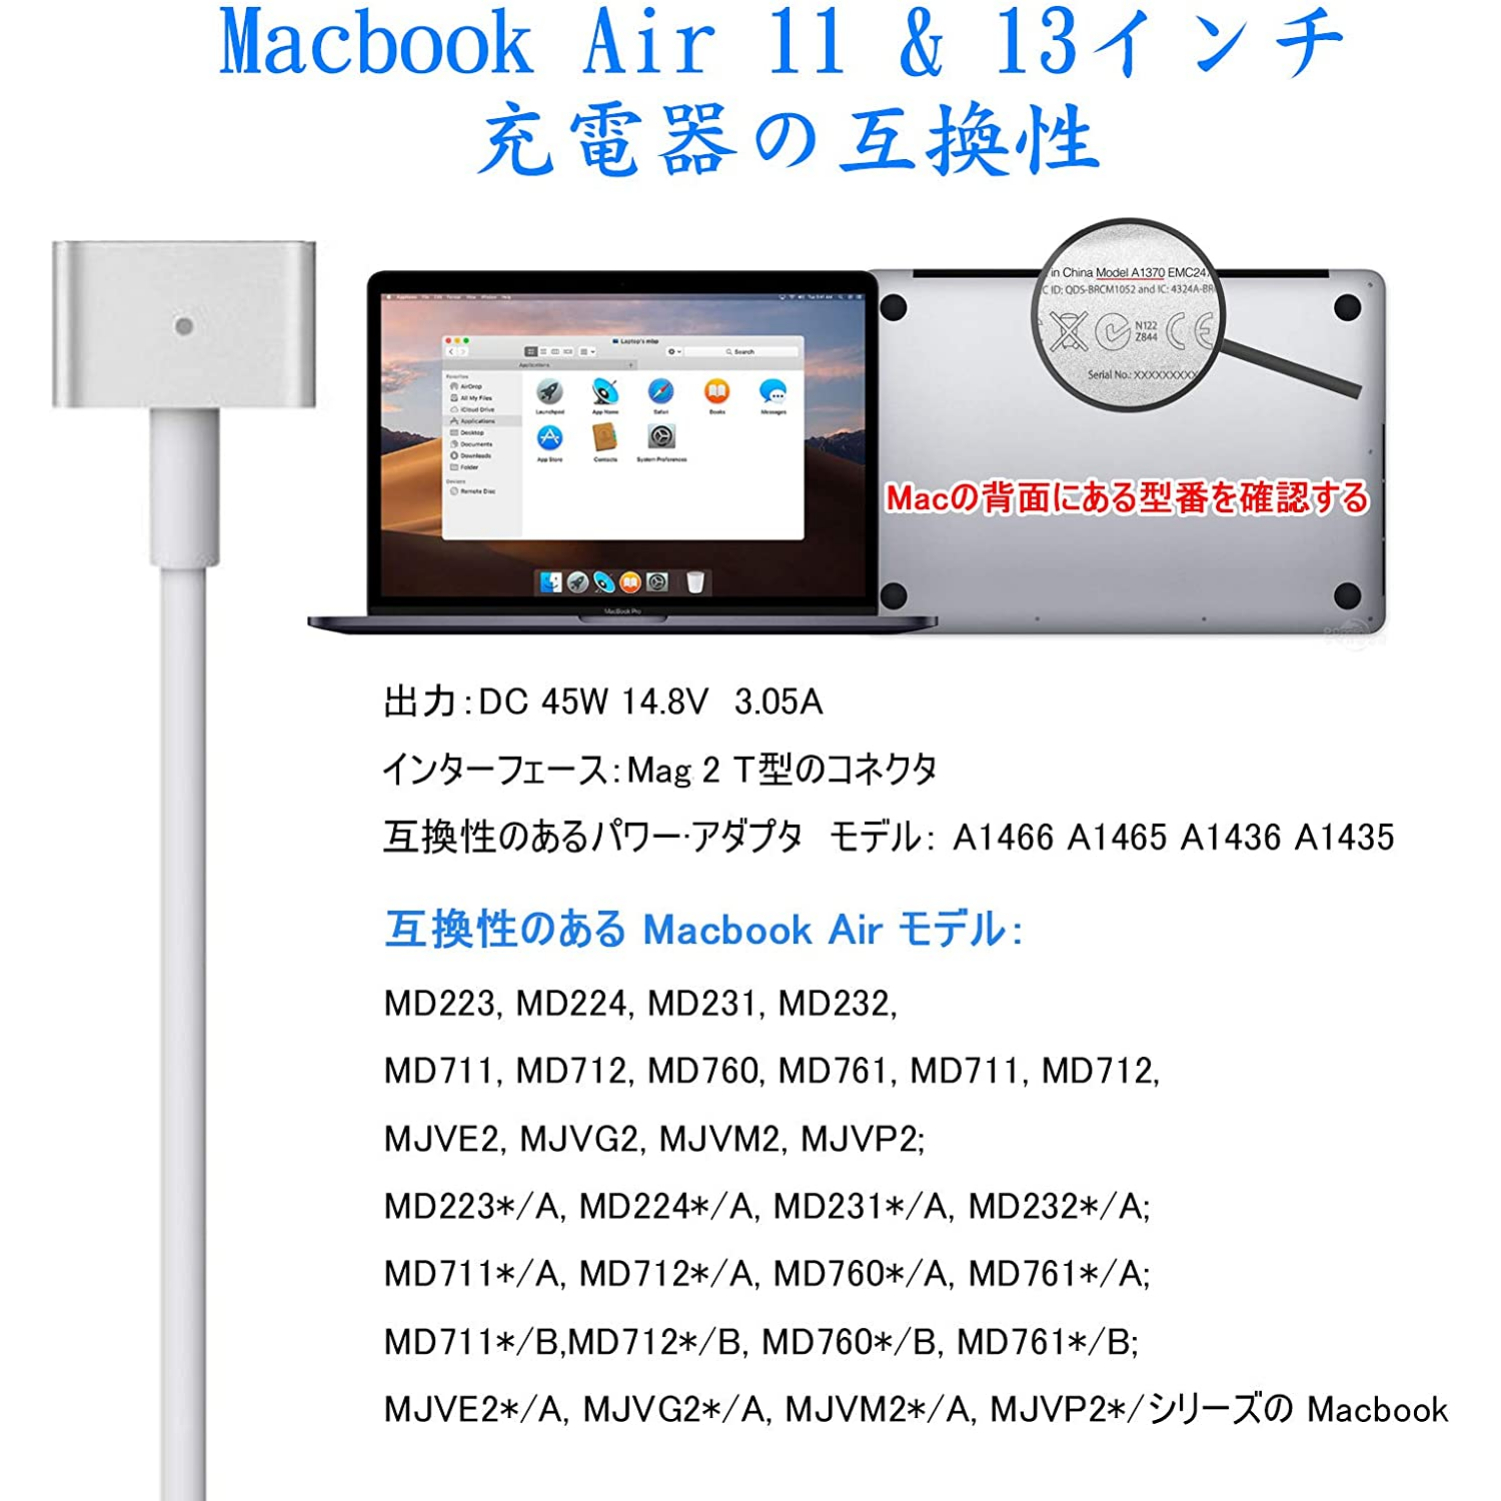 MacBook Air 充電器 45W Mag 2 T型 電源アダプタ Mac 互換電源アダプタ